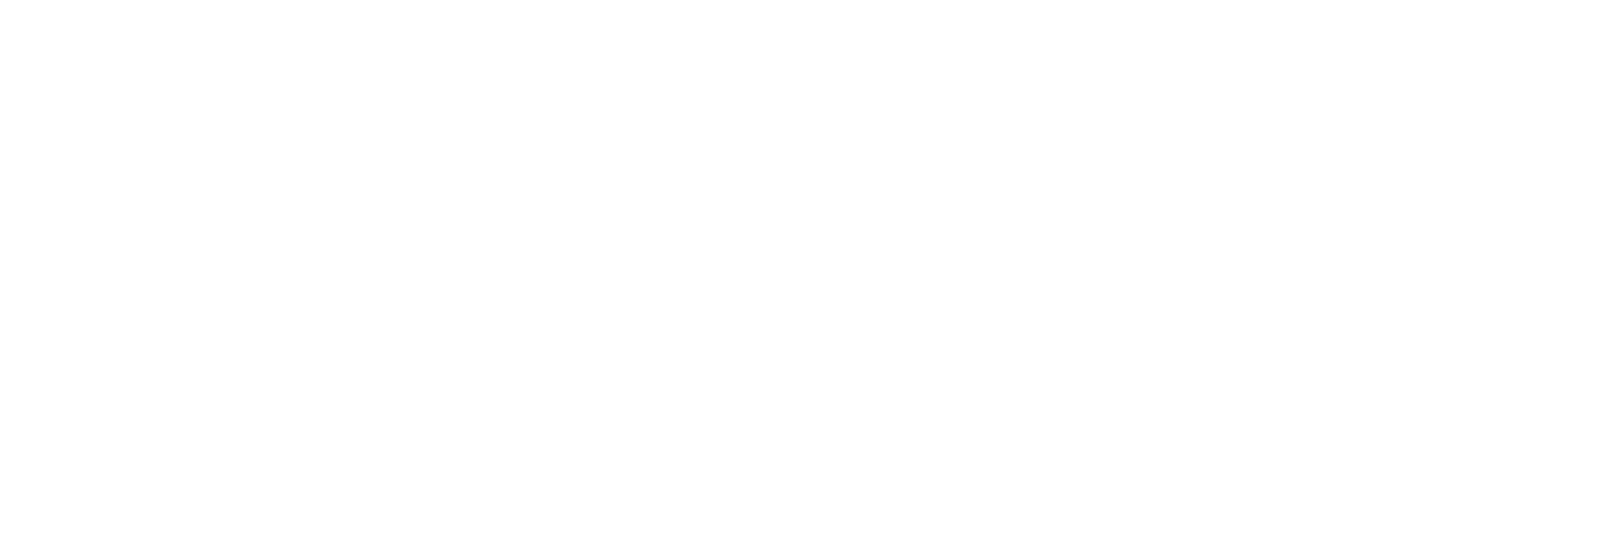 Making life automated strapline